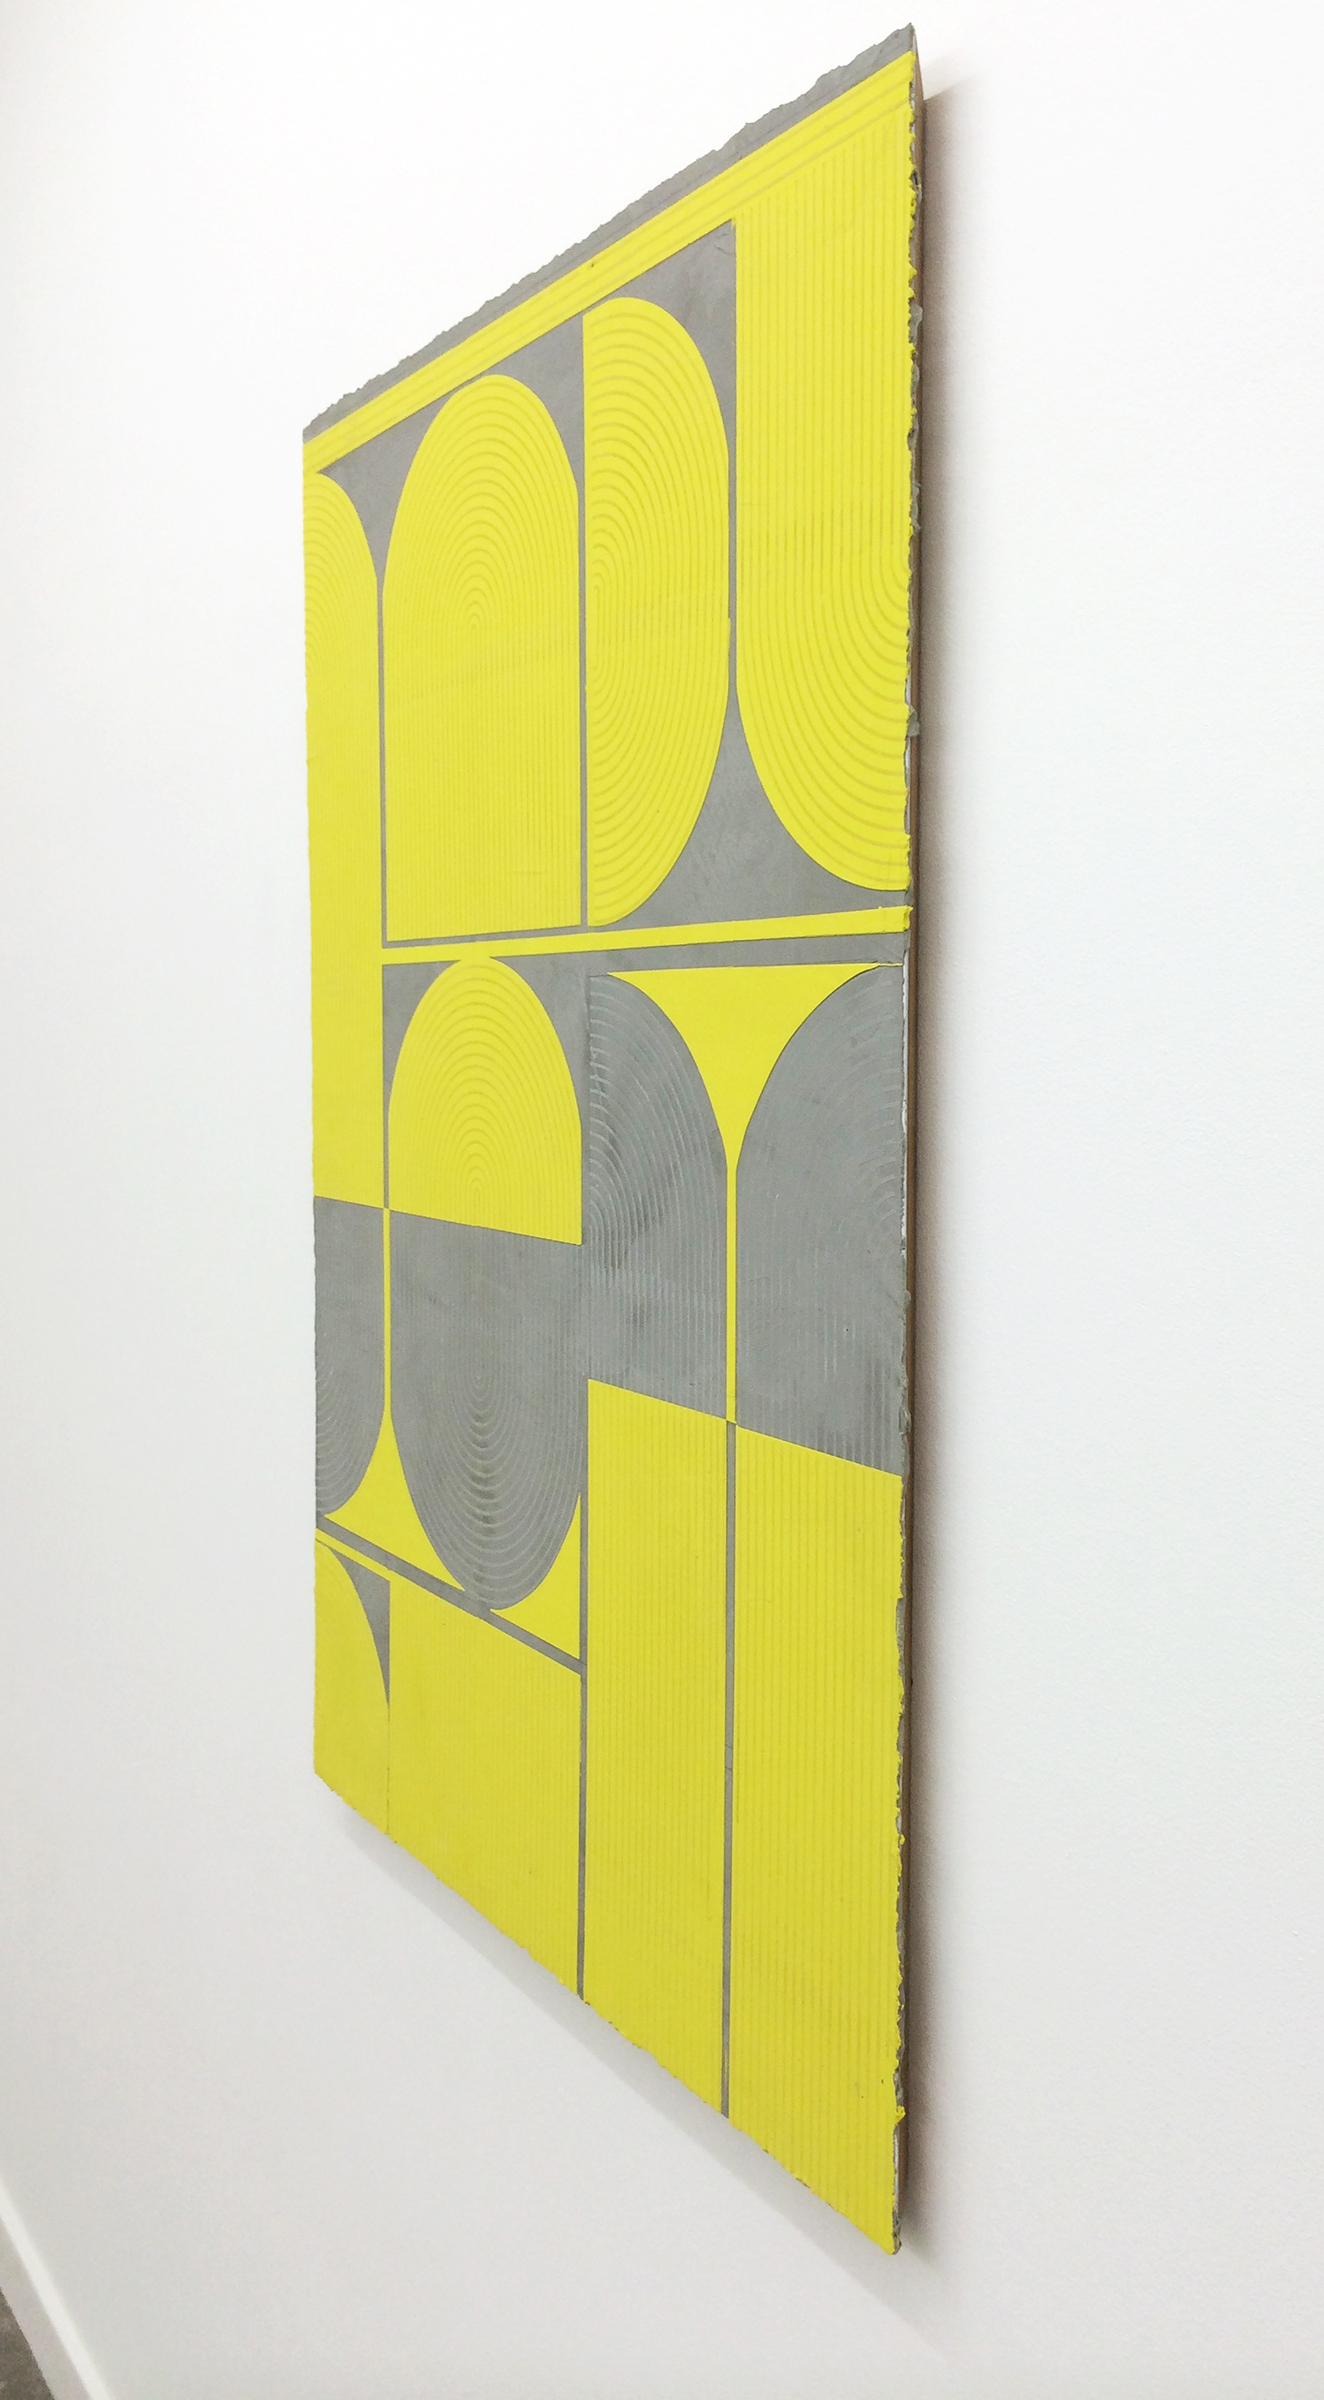   ELISE FERGUSON  (profile)&nbsp; Citron , 2016, pigmented plaster on panel, 40" x 30"   